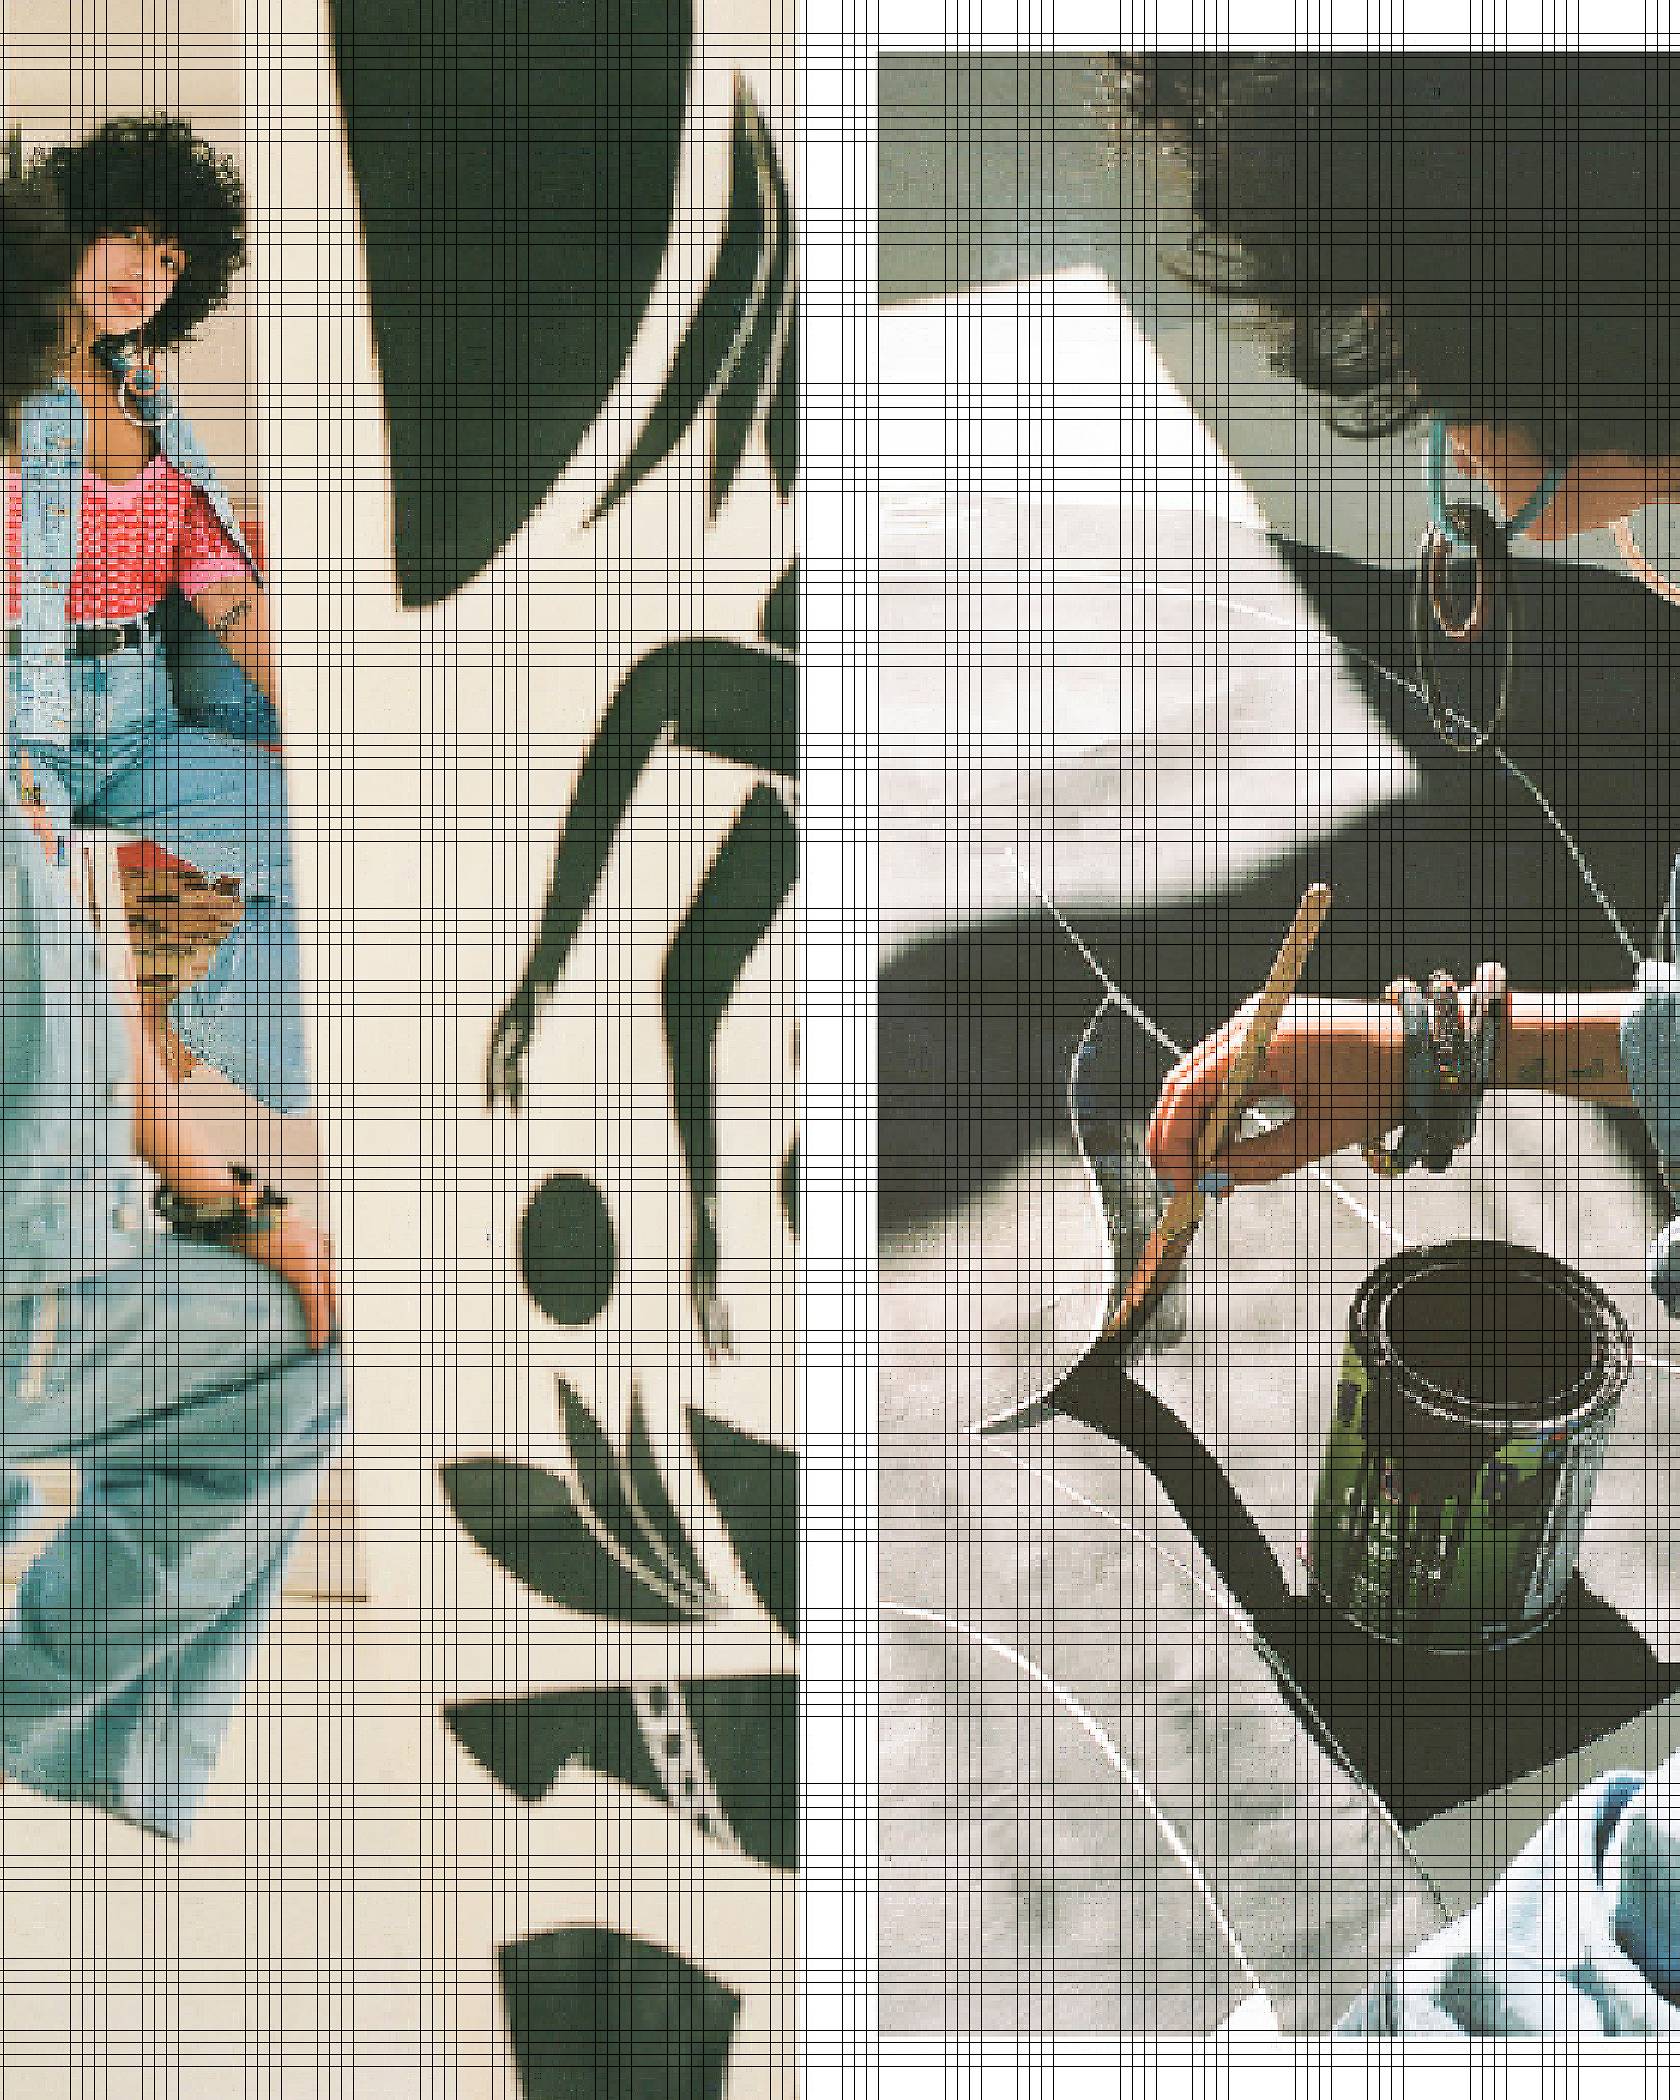 Side-by-side images of Salomée Souag in her studio.